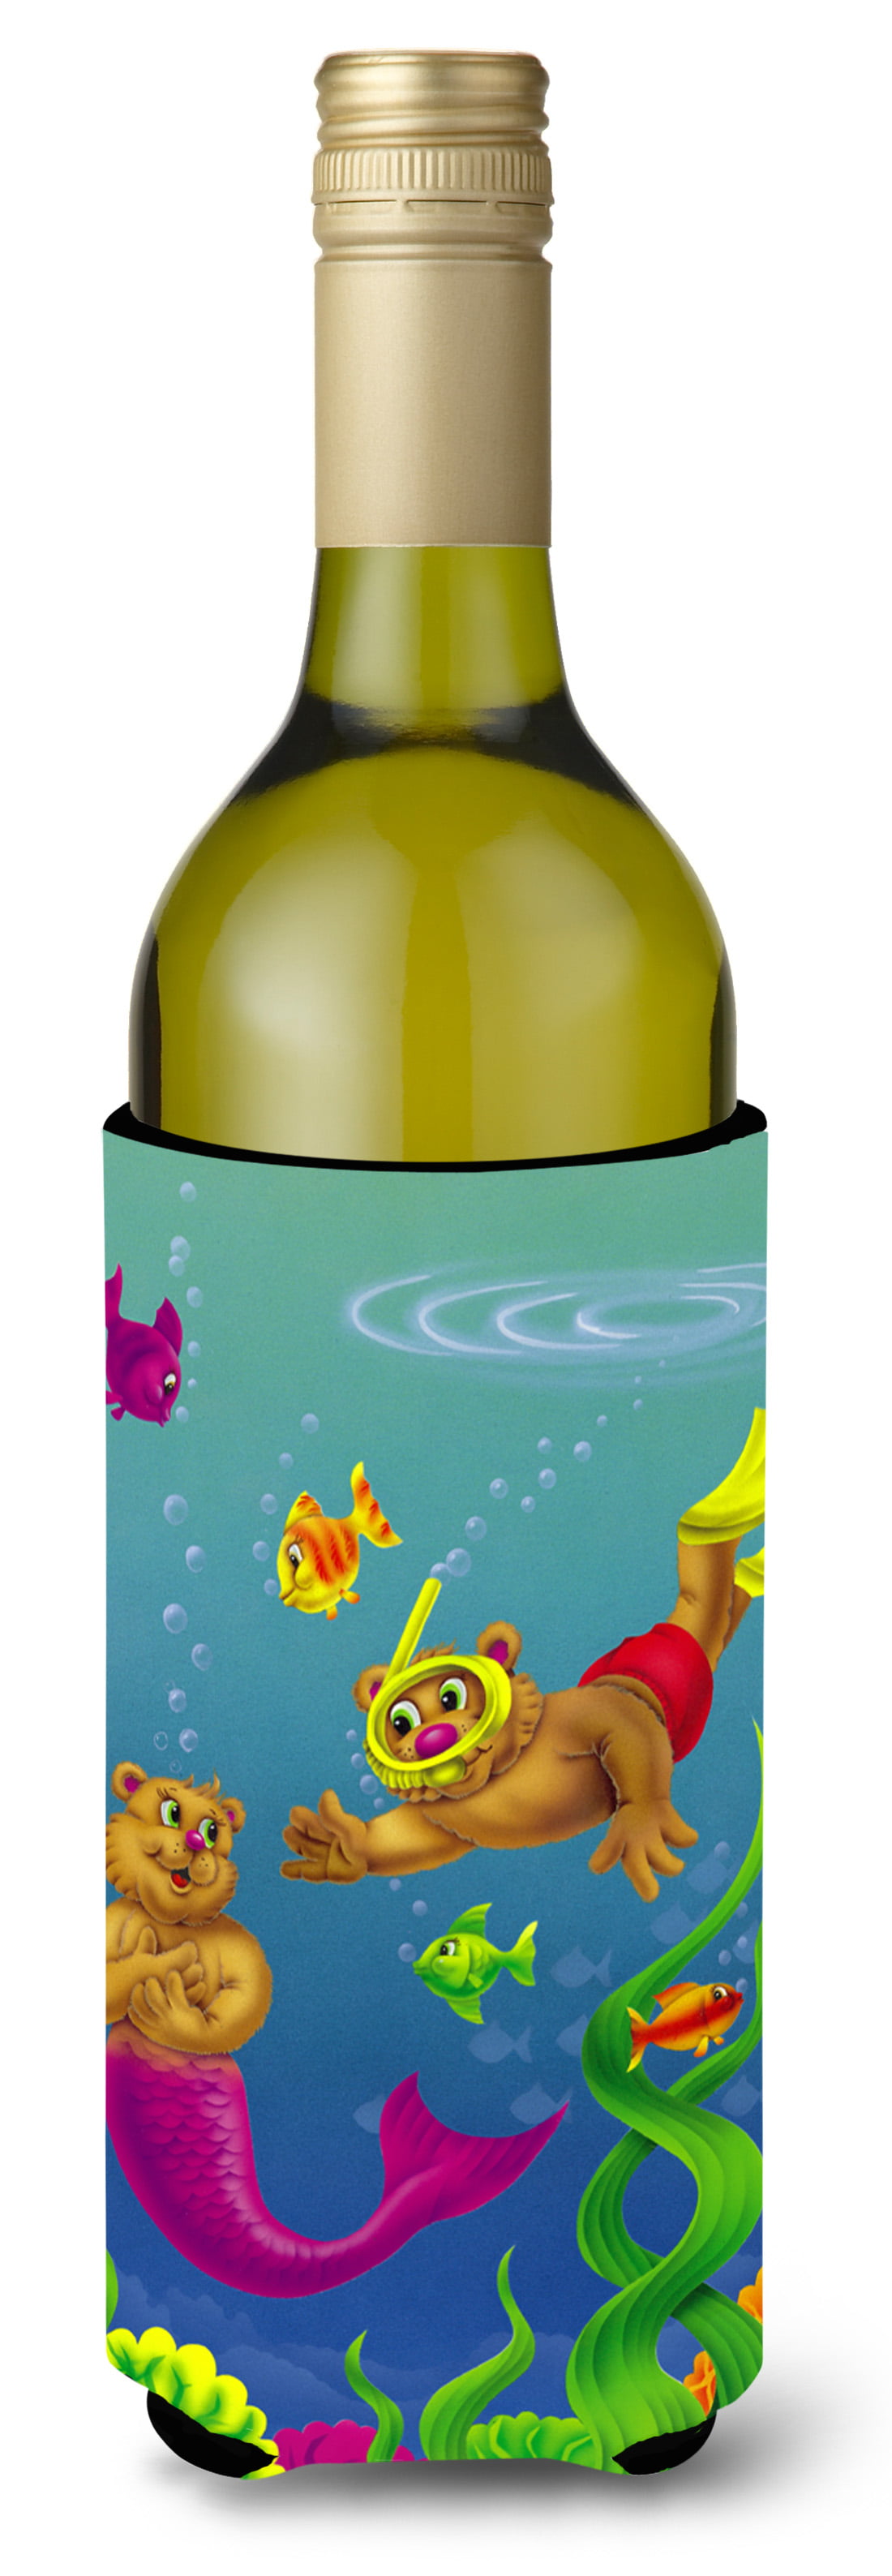 Scuba Diver Metal Wine Bottle Holder Character 